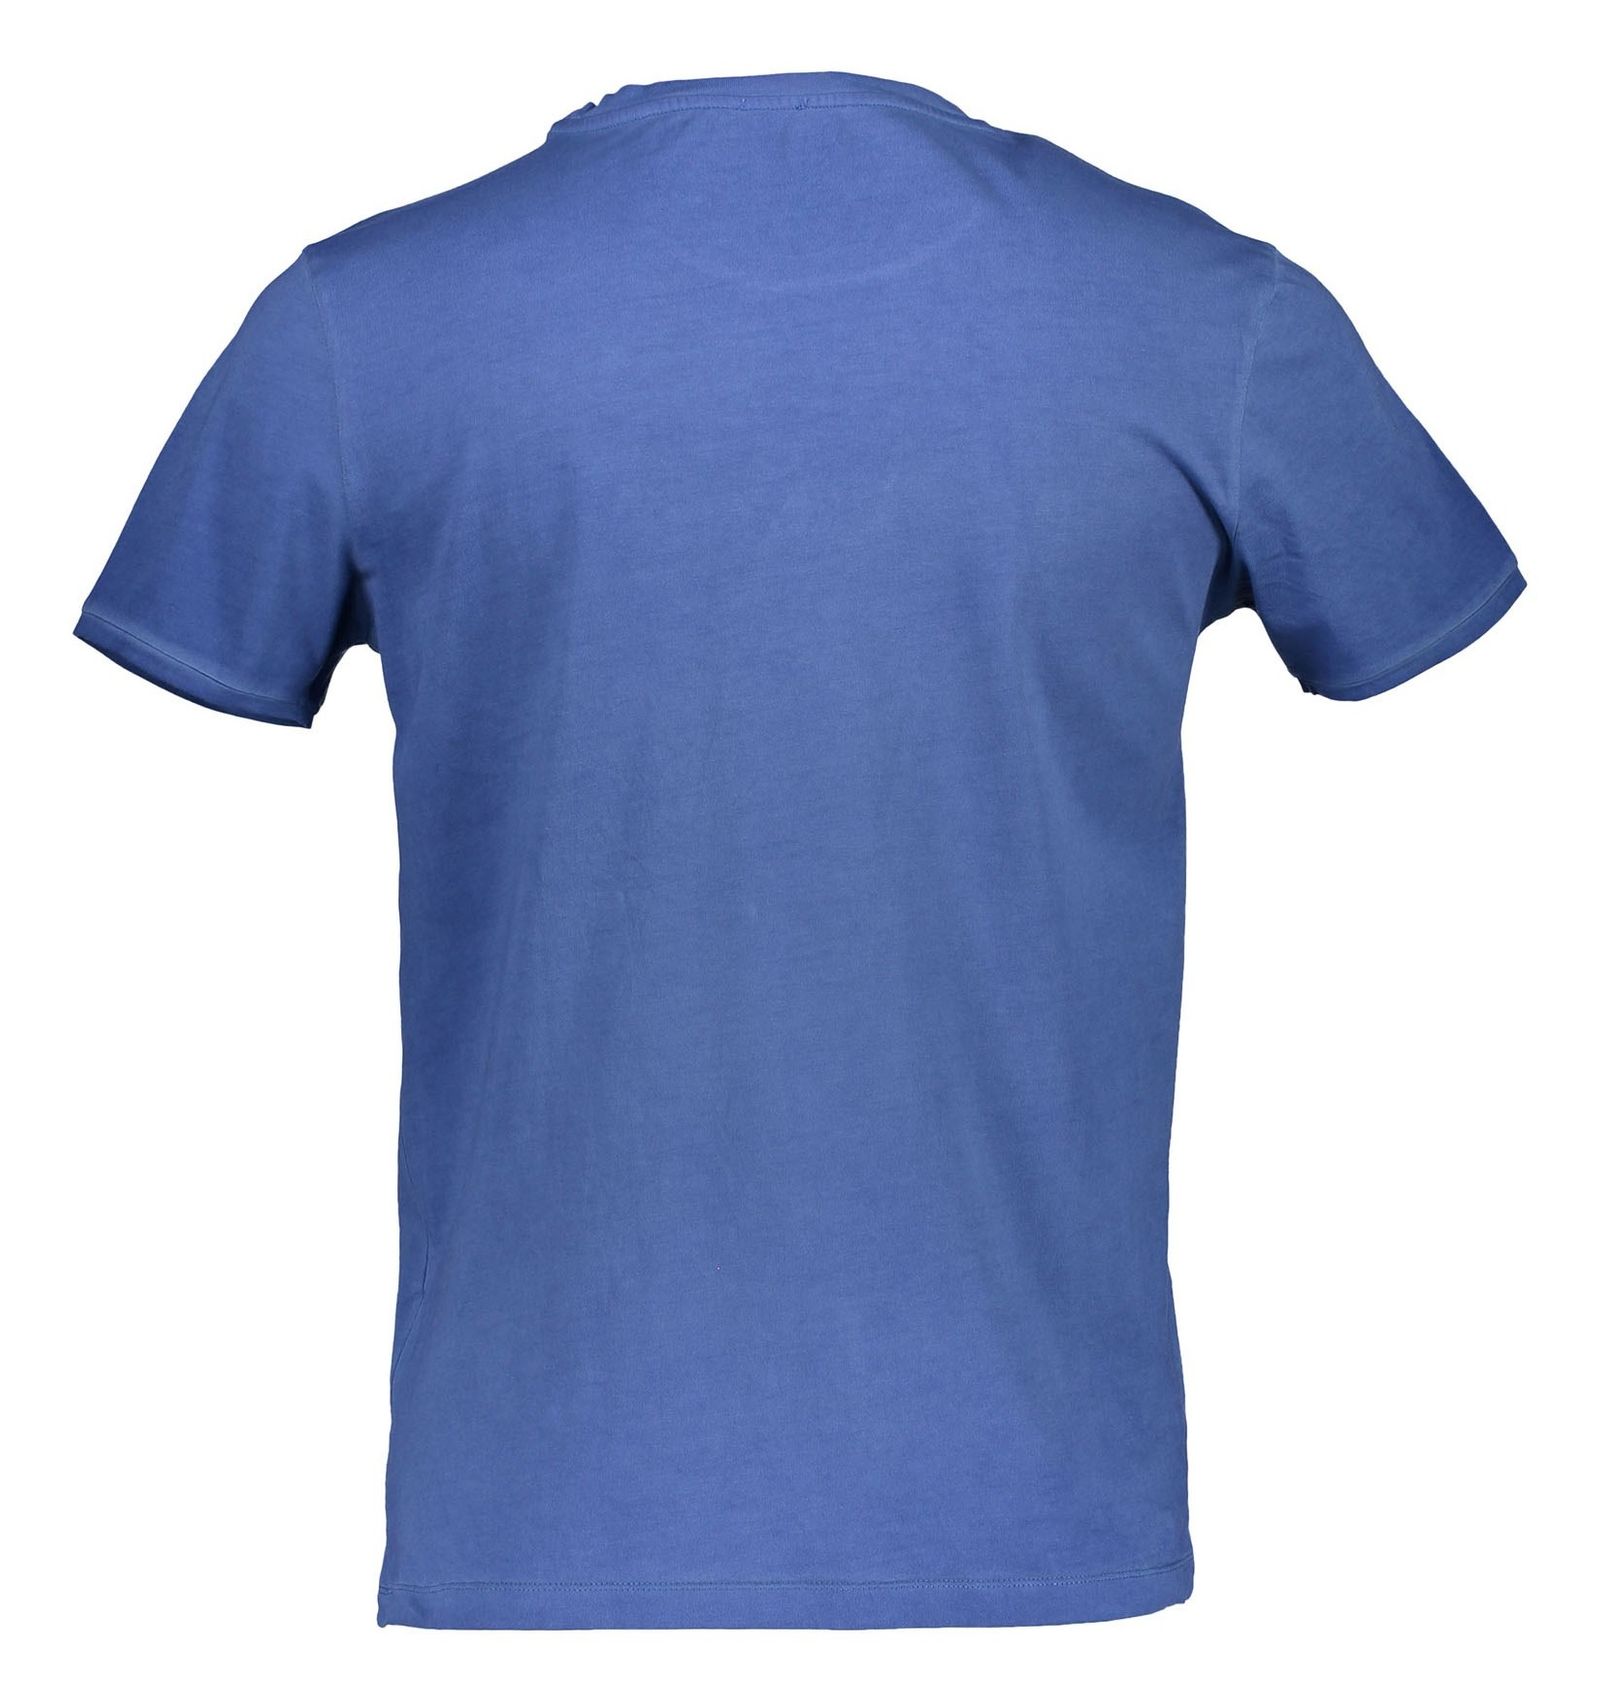 تی شرت نخی یقه گرد مردانه Tomlouis - باس اورنج - آبي - 3